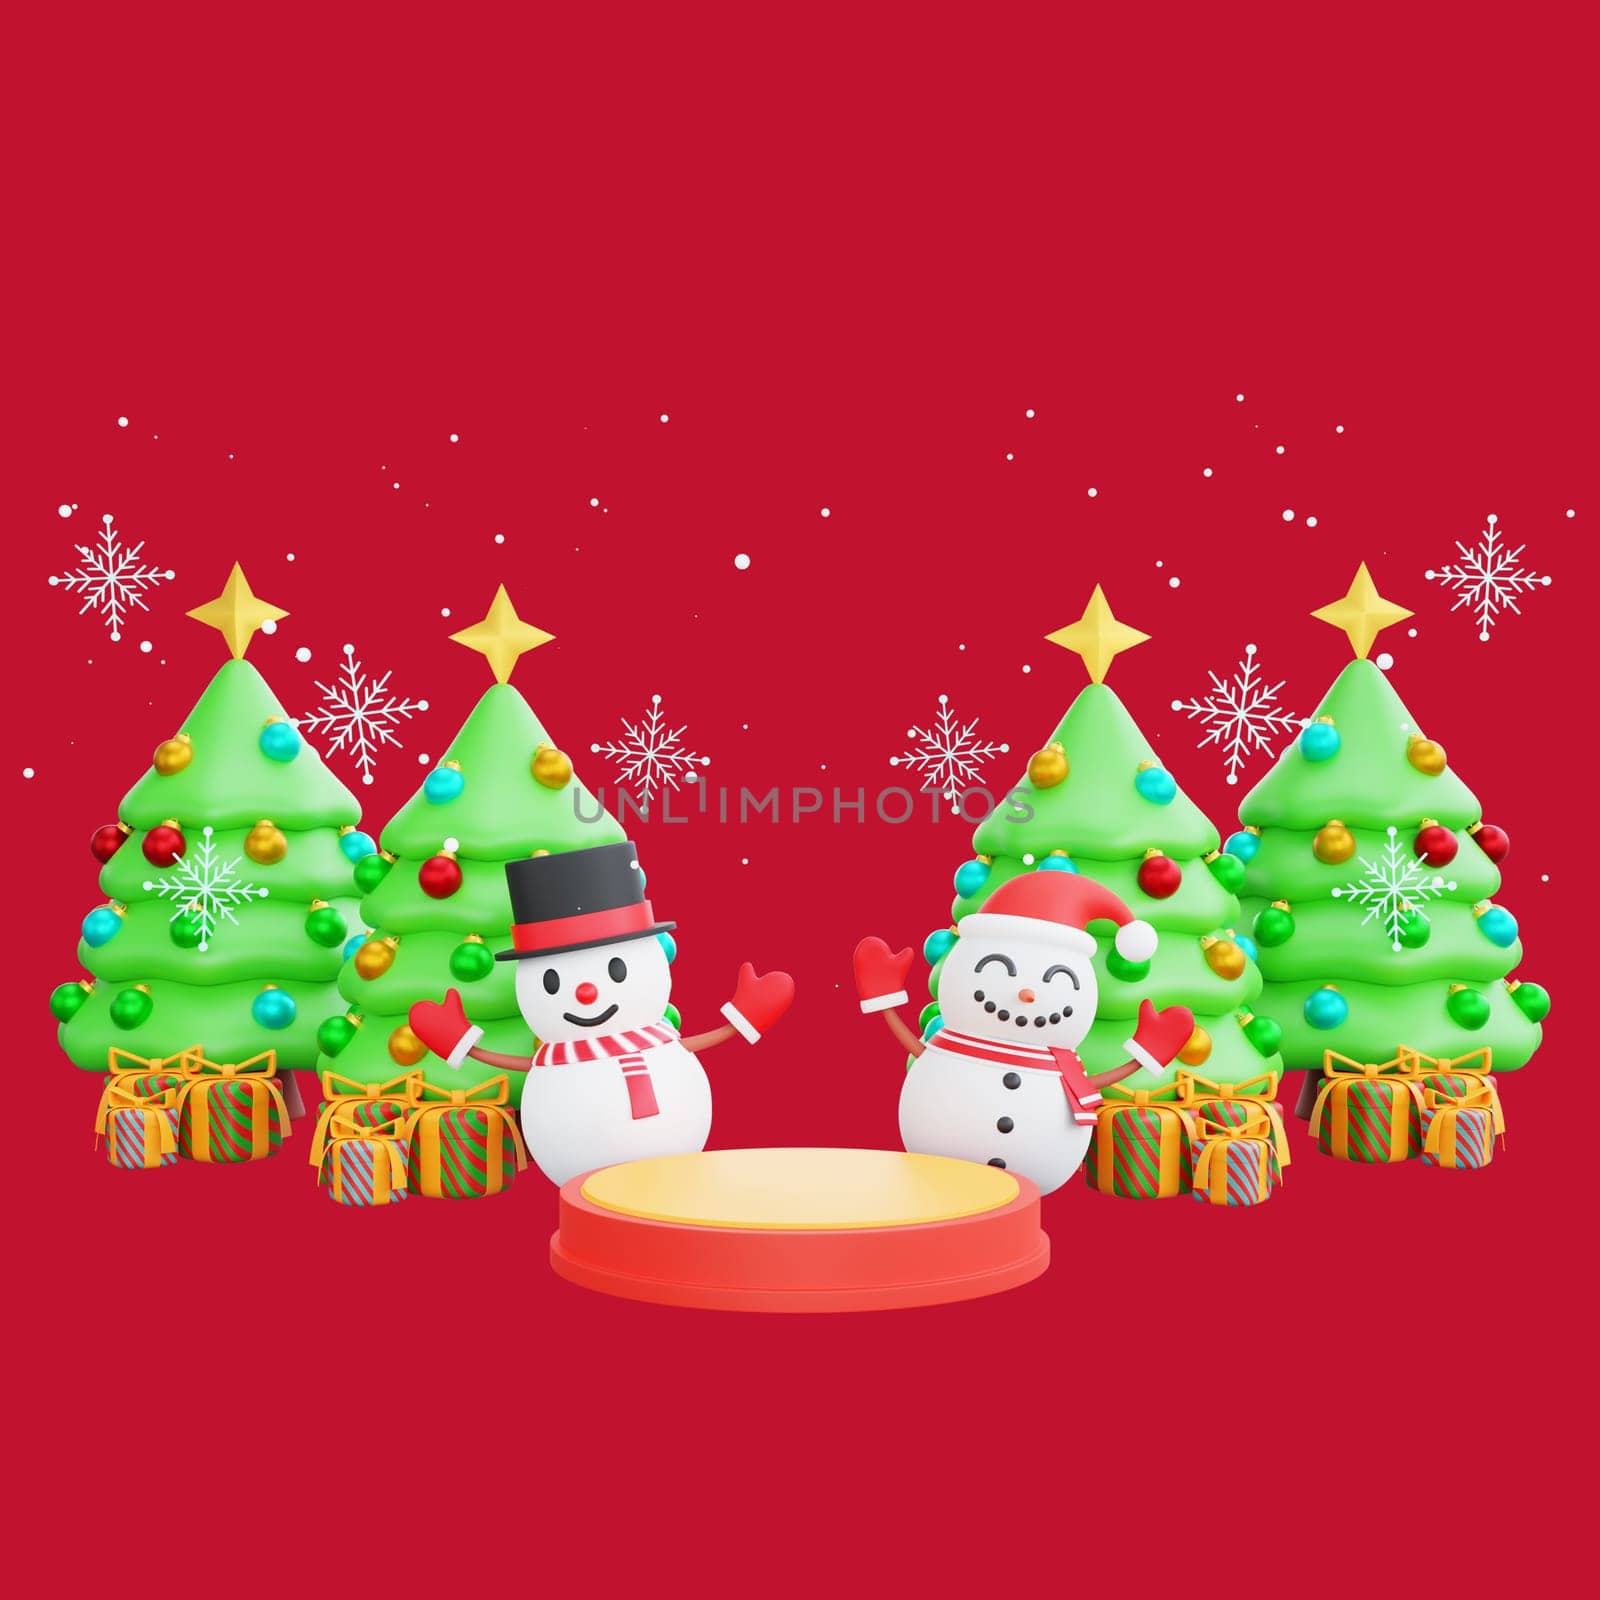 3D illustration of a Christmas Snowman and Trees on a podium. Christmas decoration design by Rahmat_Djayusman